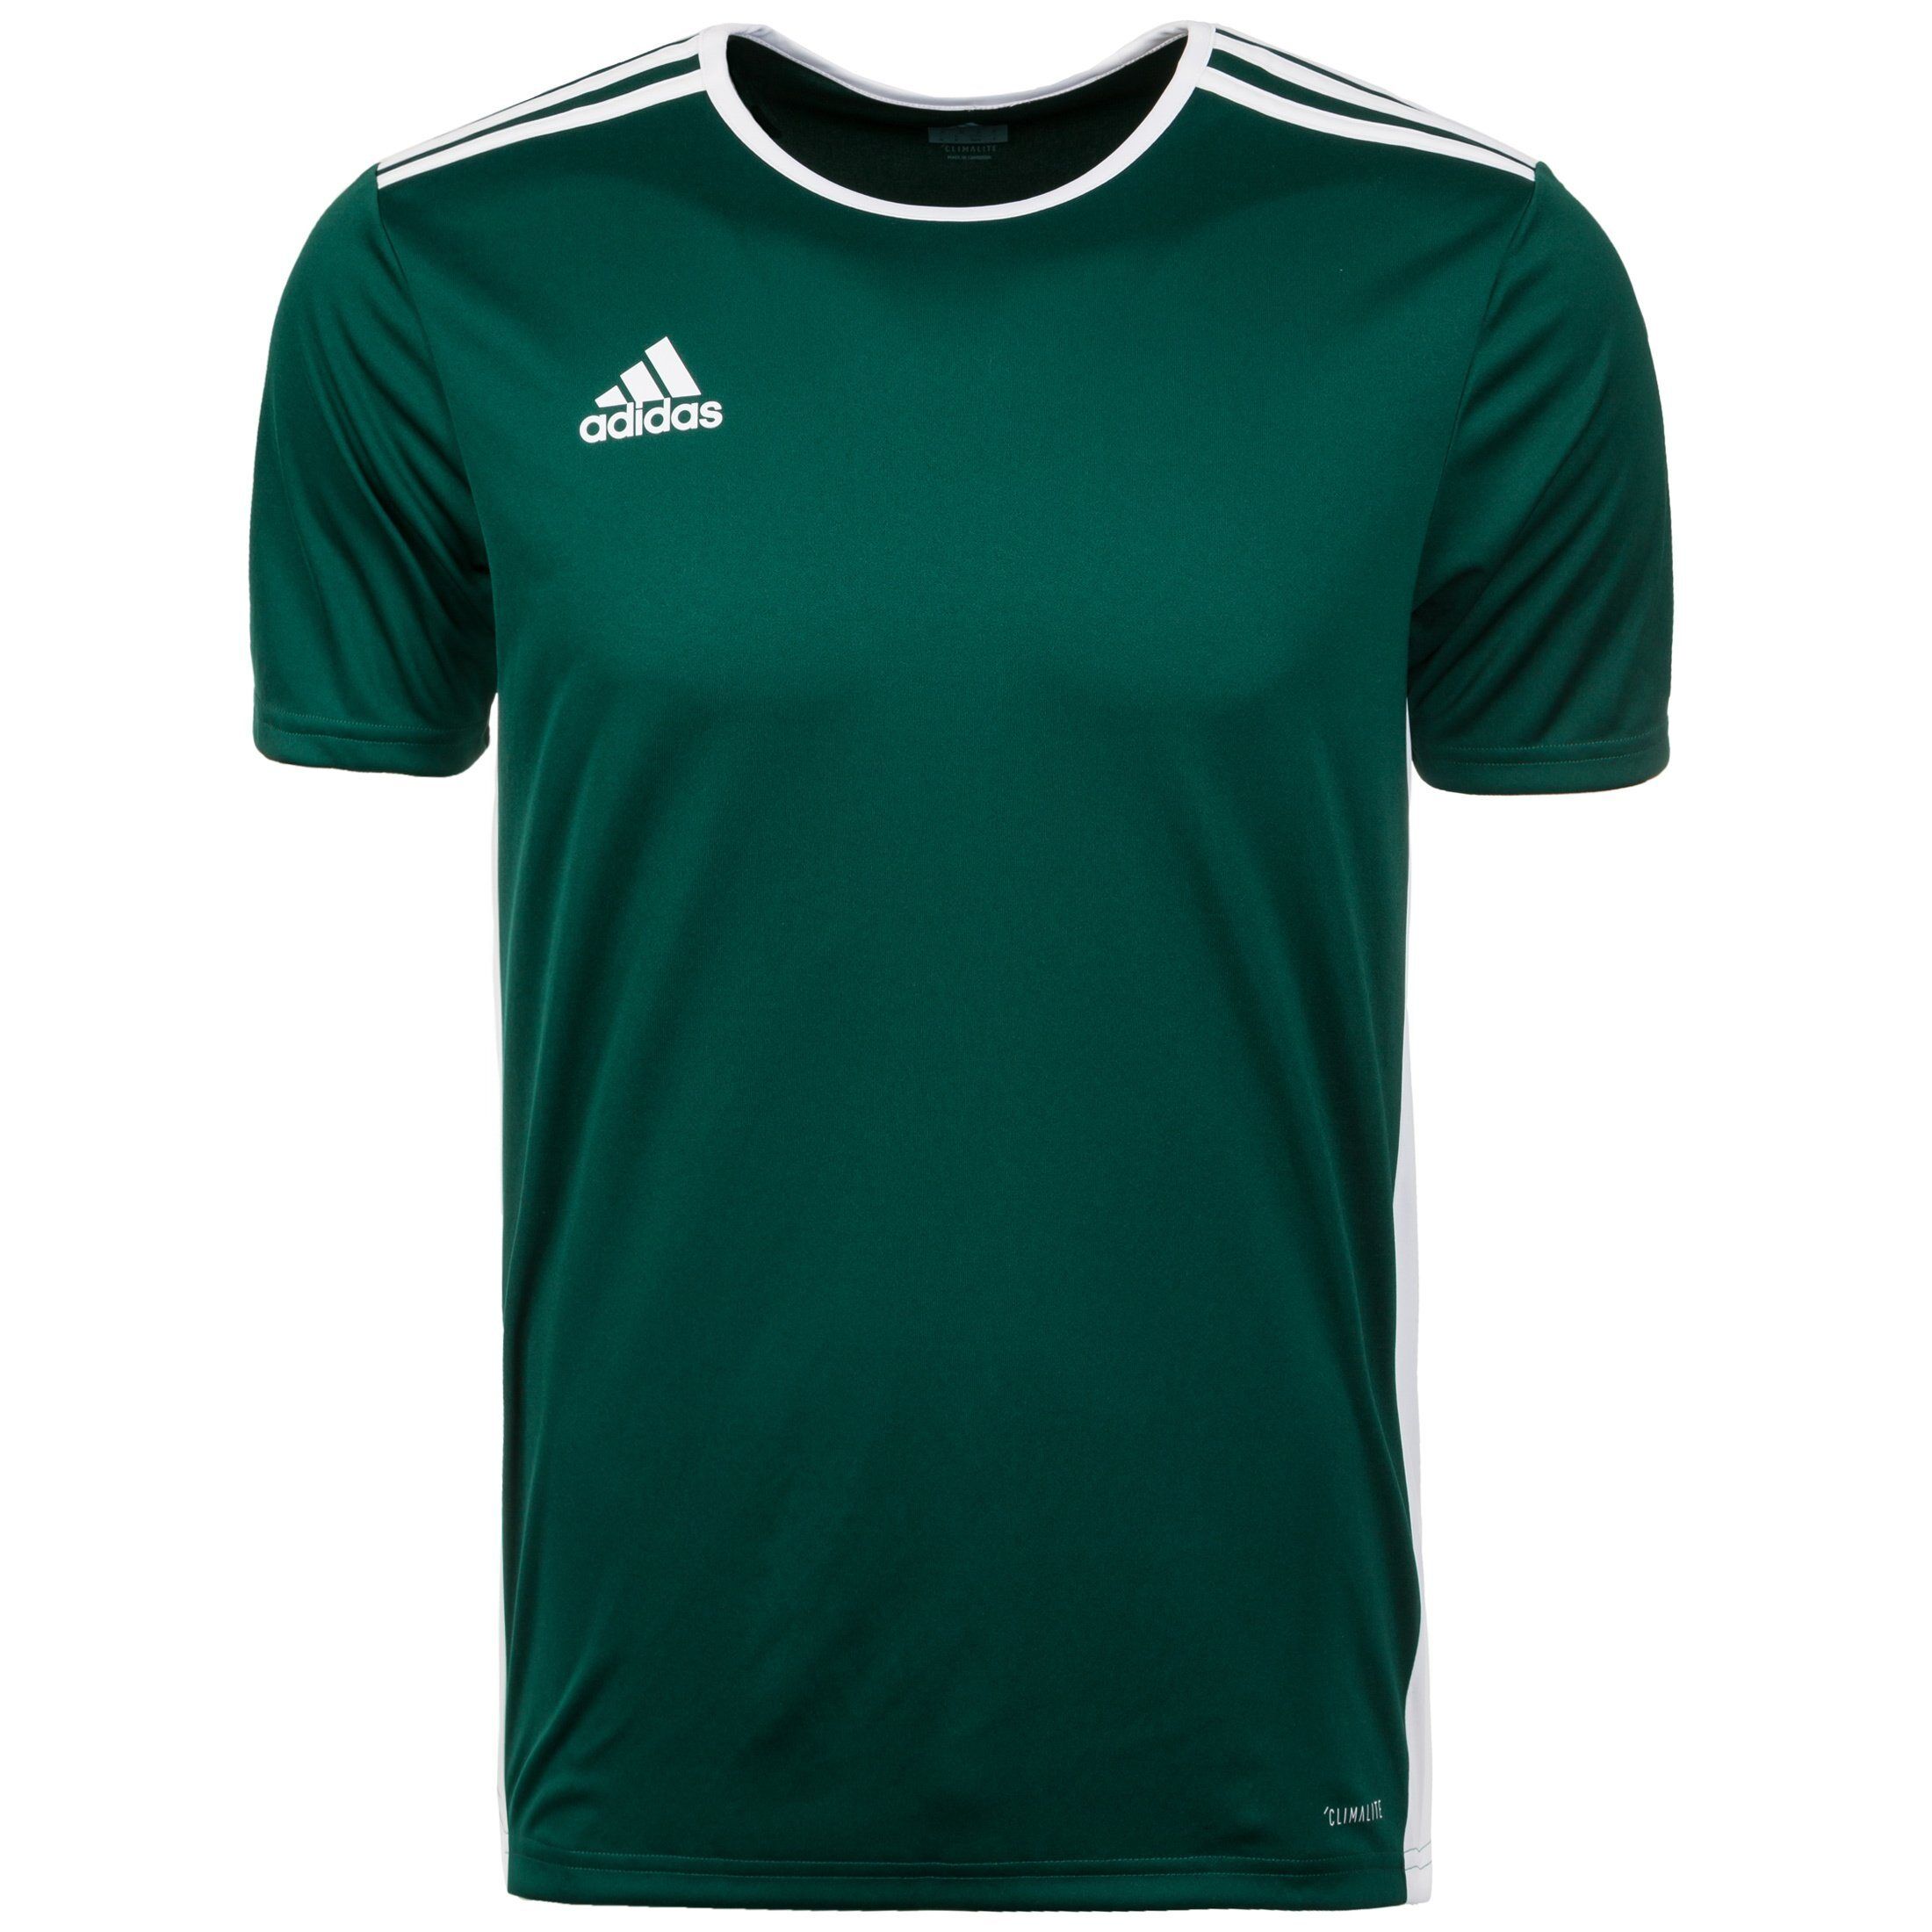 Adidas Performance Fußballtrikot »Entrada 18«, dunkelgrün-weiß